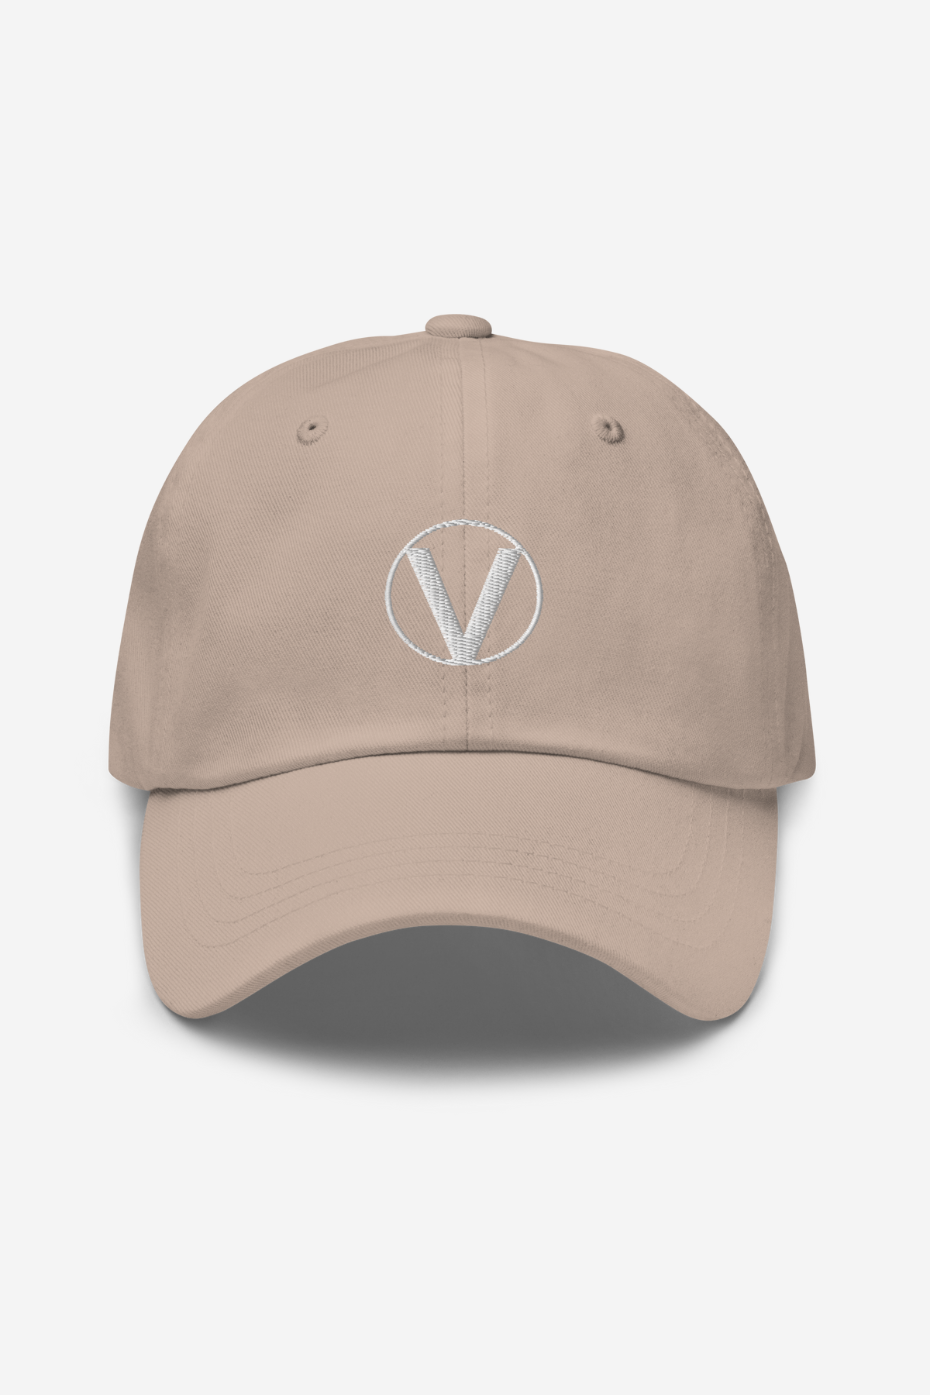 V Symbol Dad hat - Embroidery